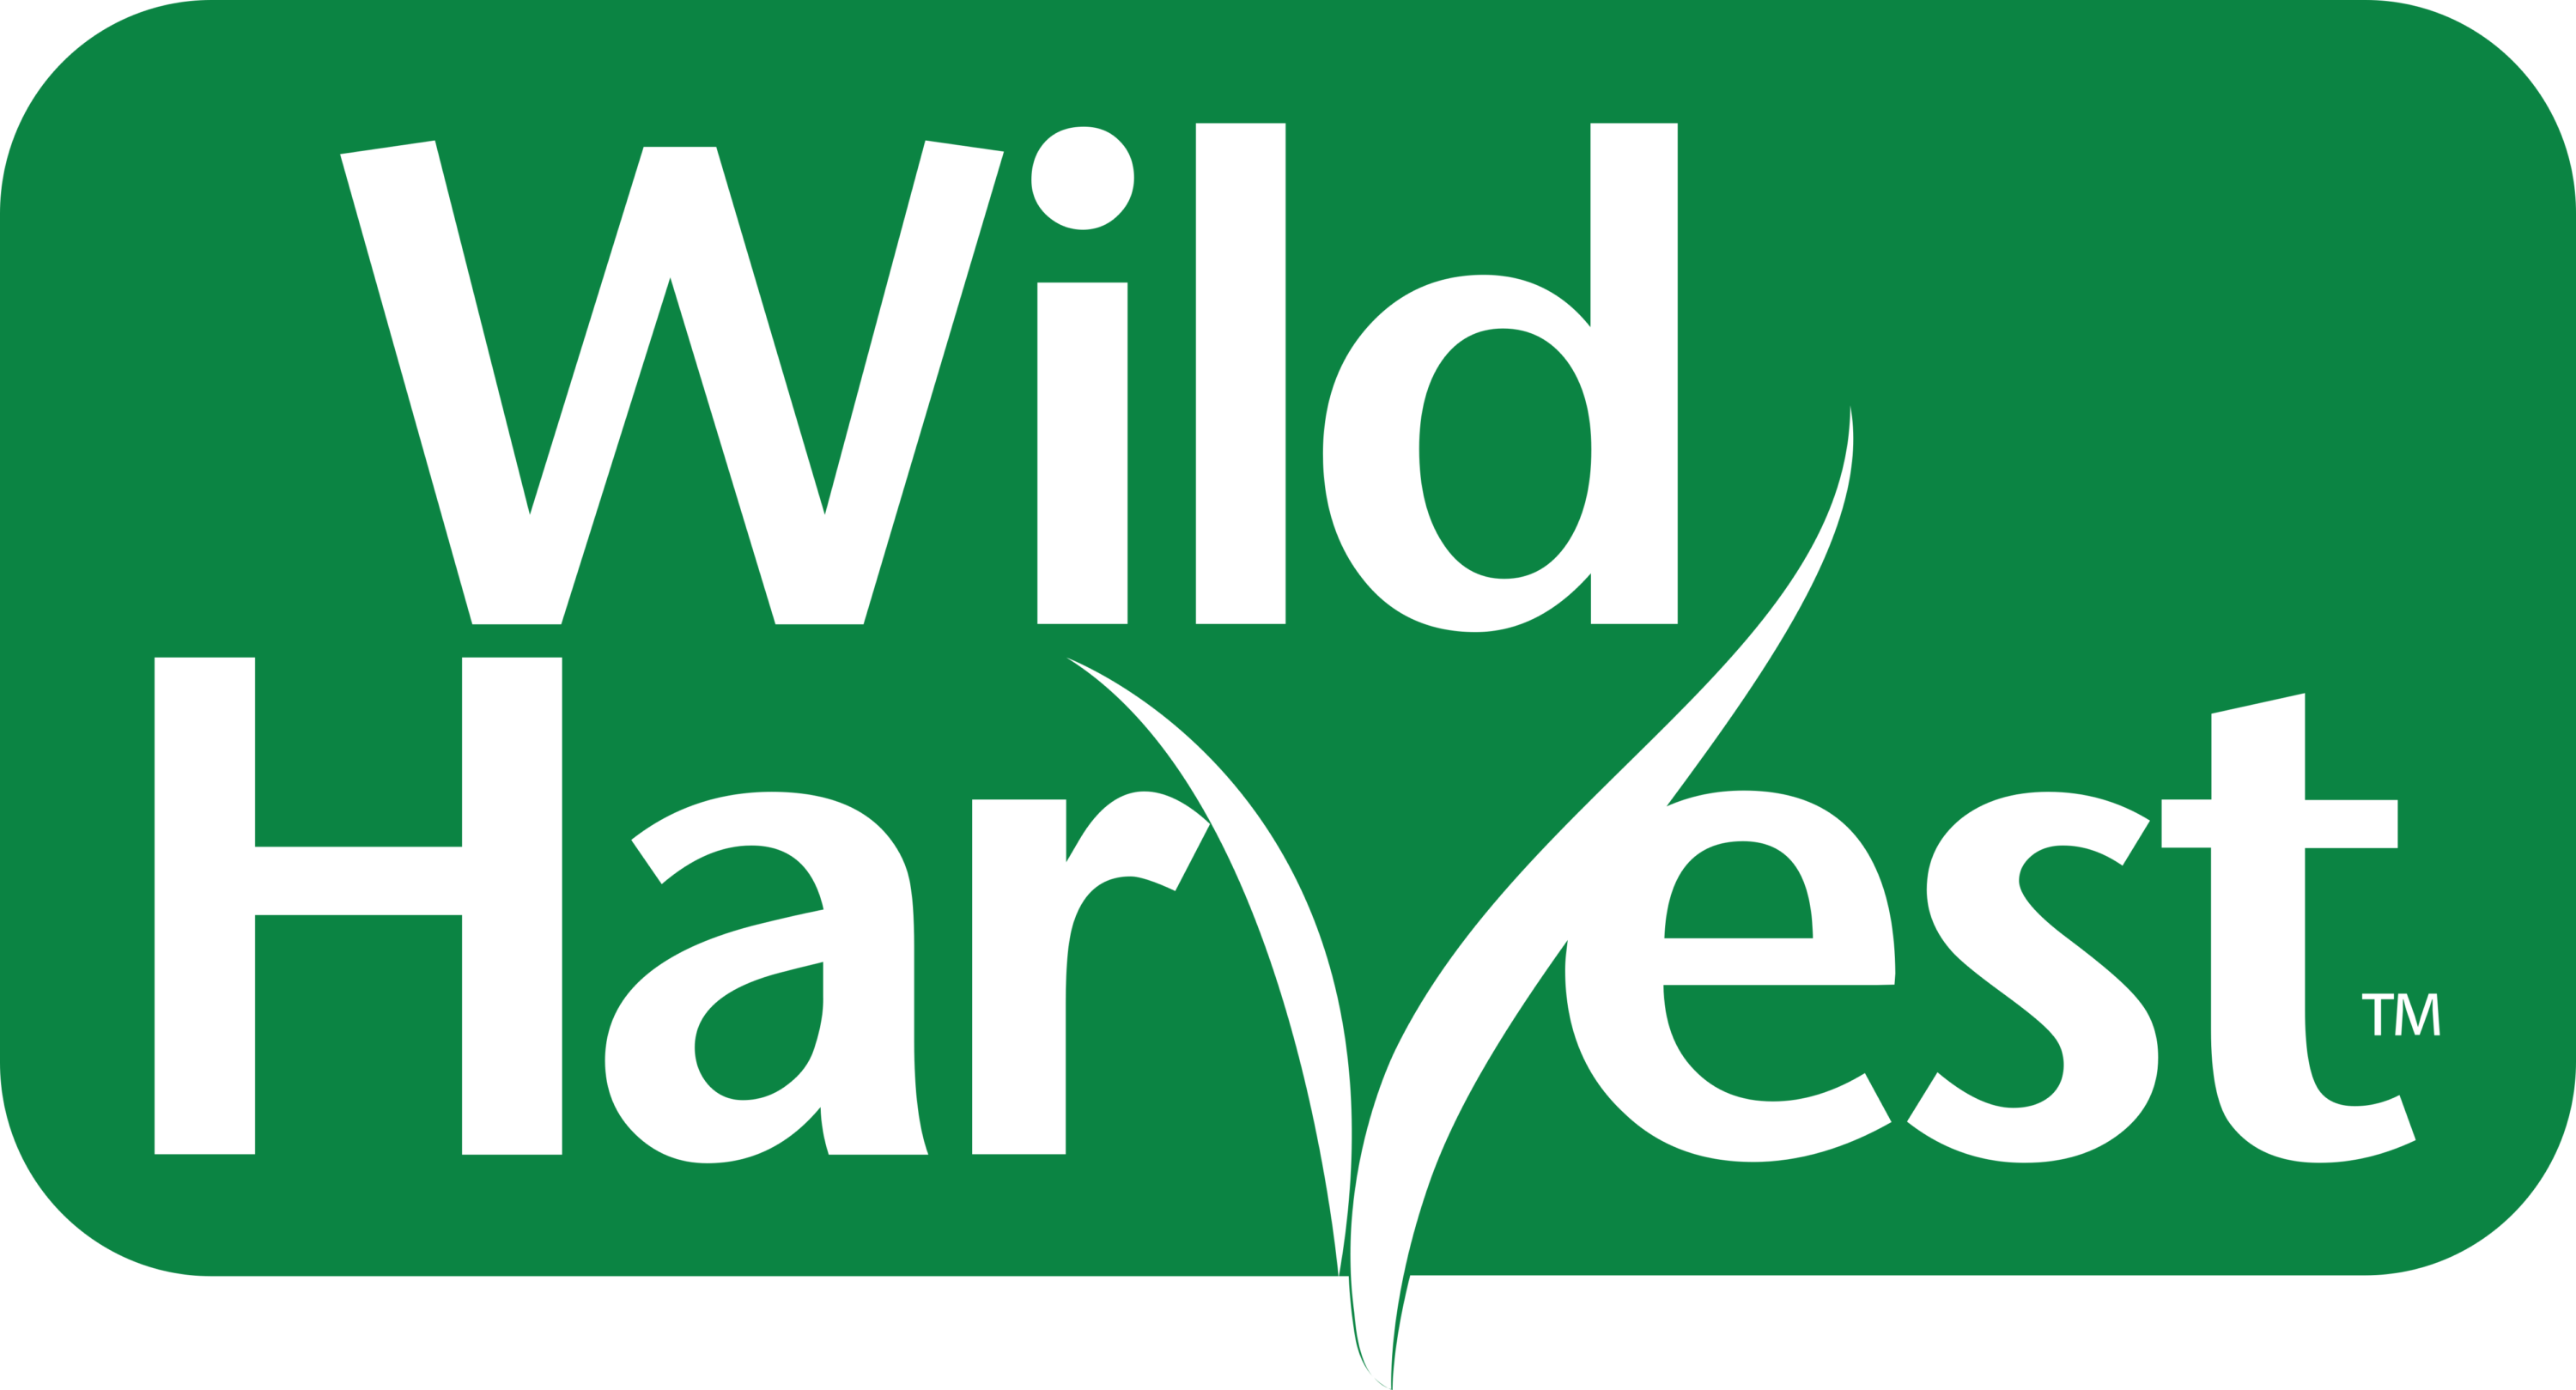 Wild Harvest Logo